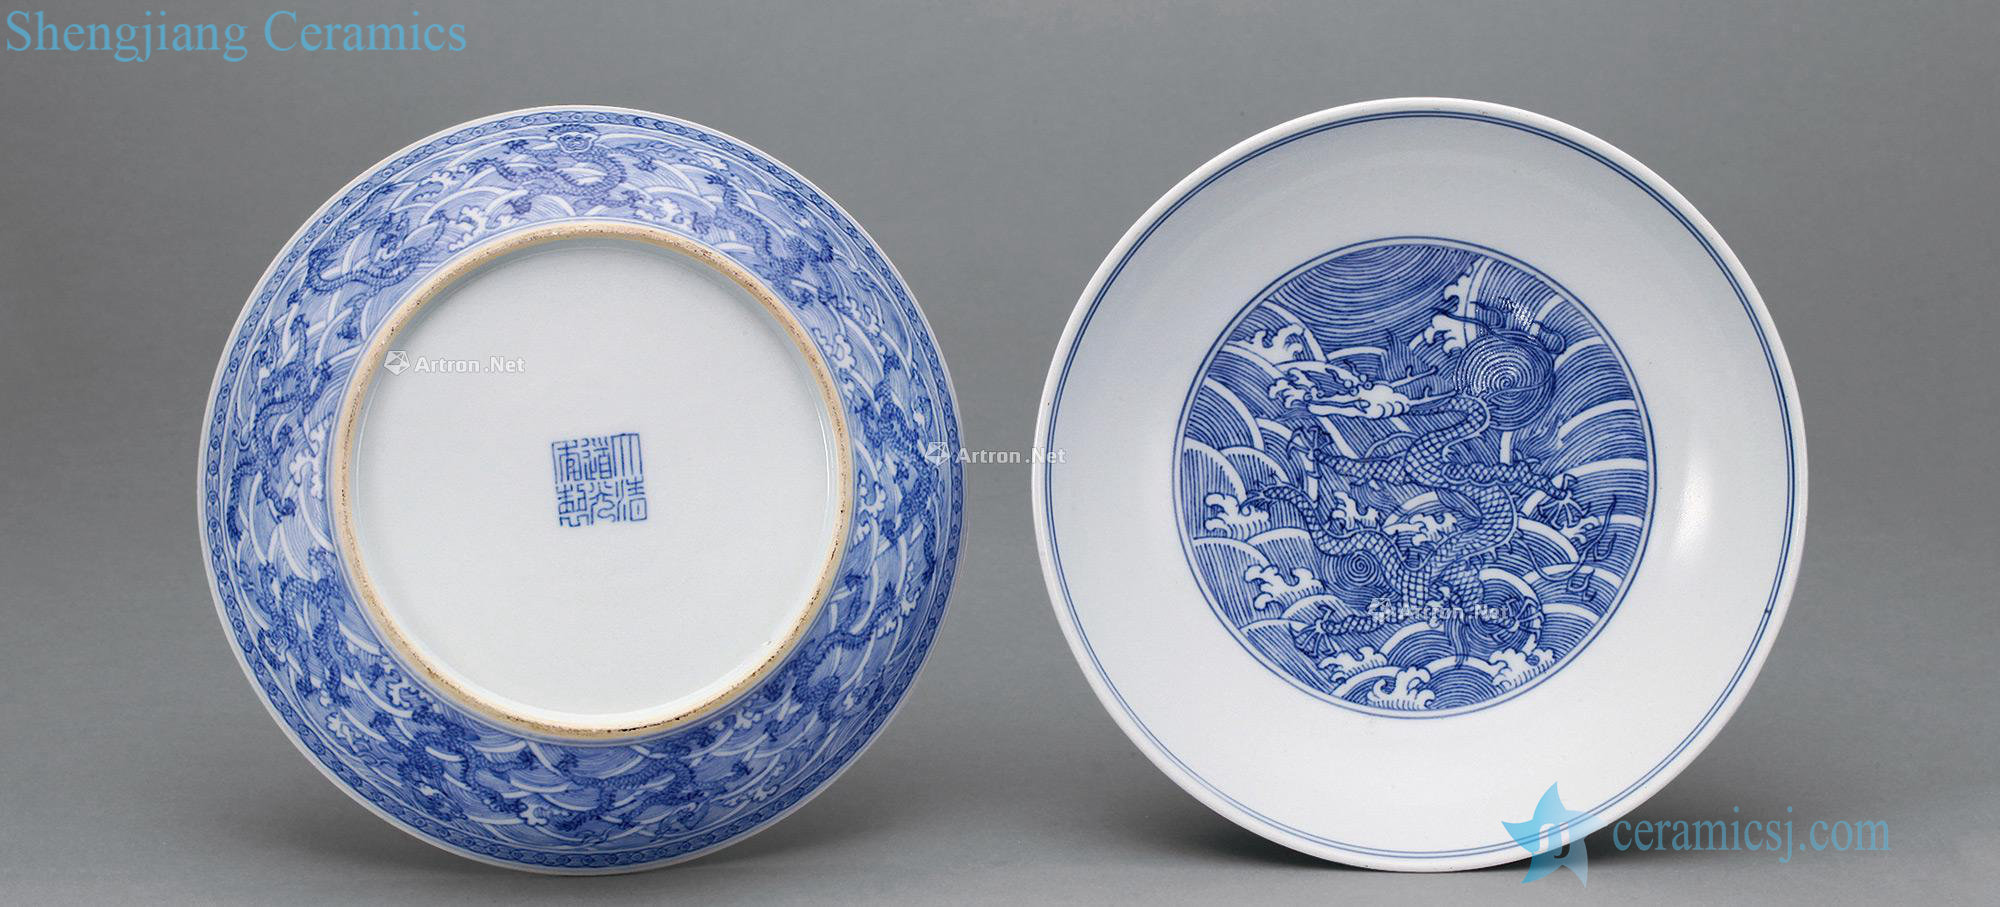 Qing daoguang Blue sea dragon plate (2)